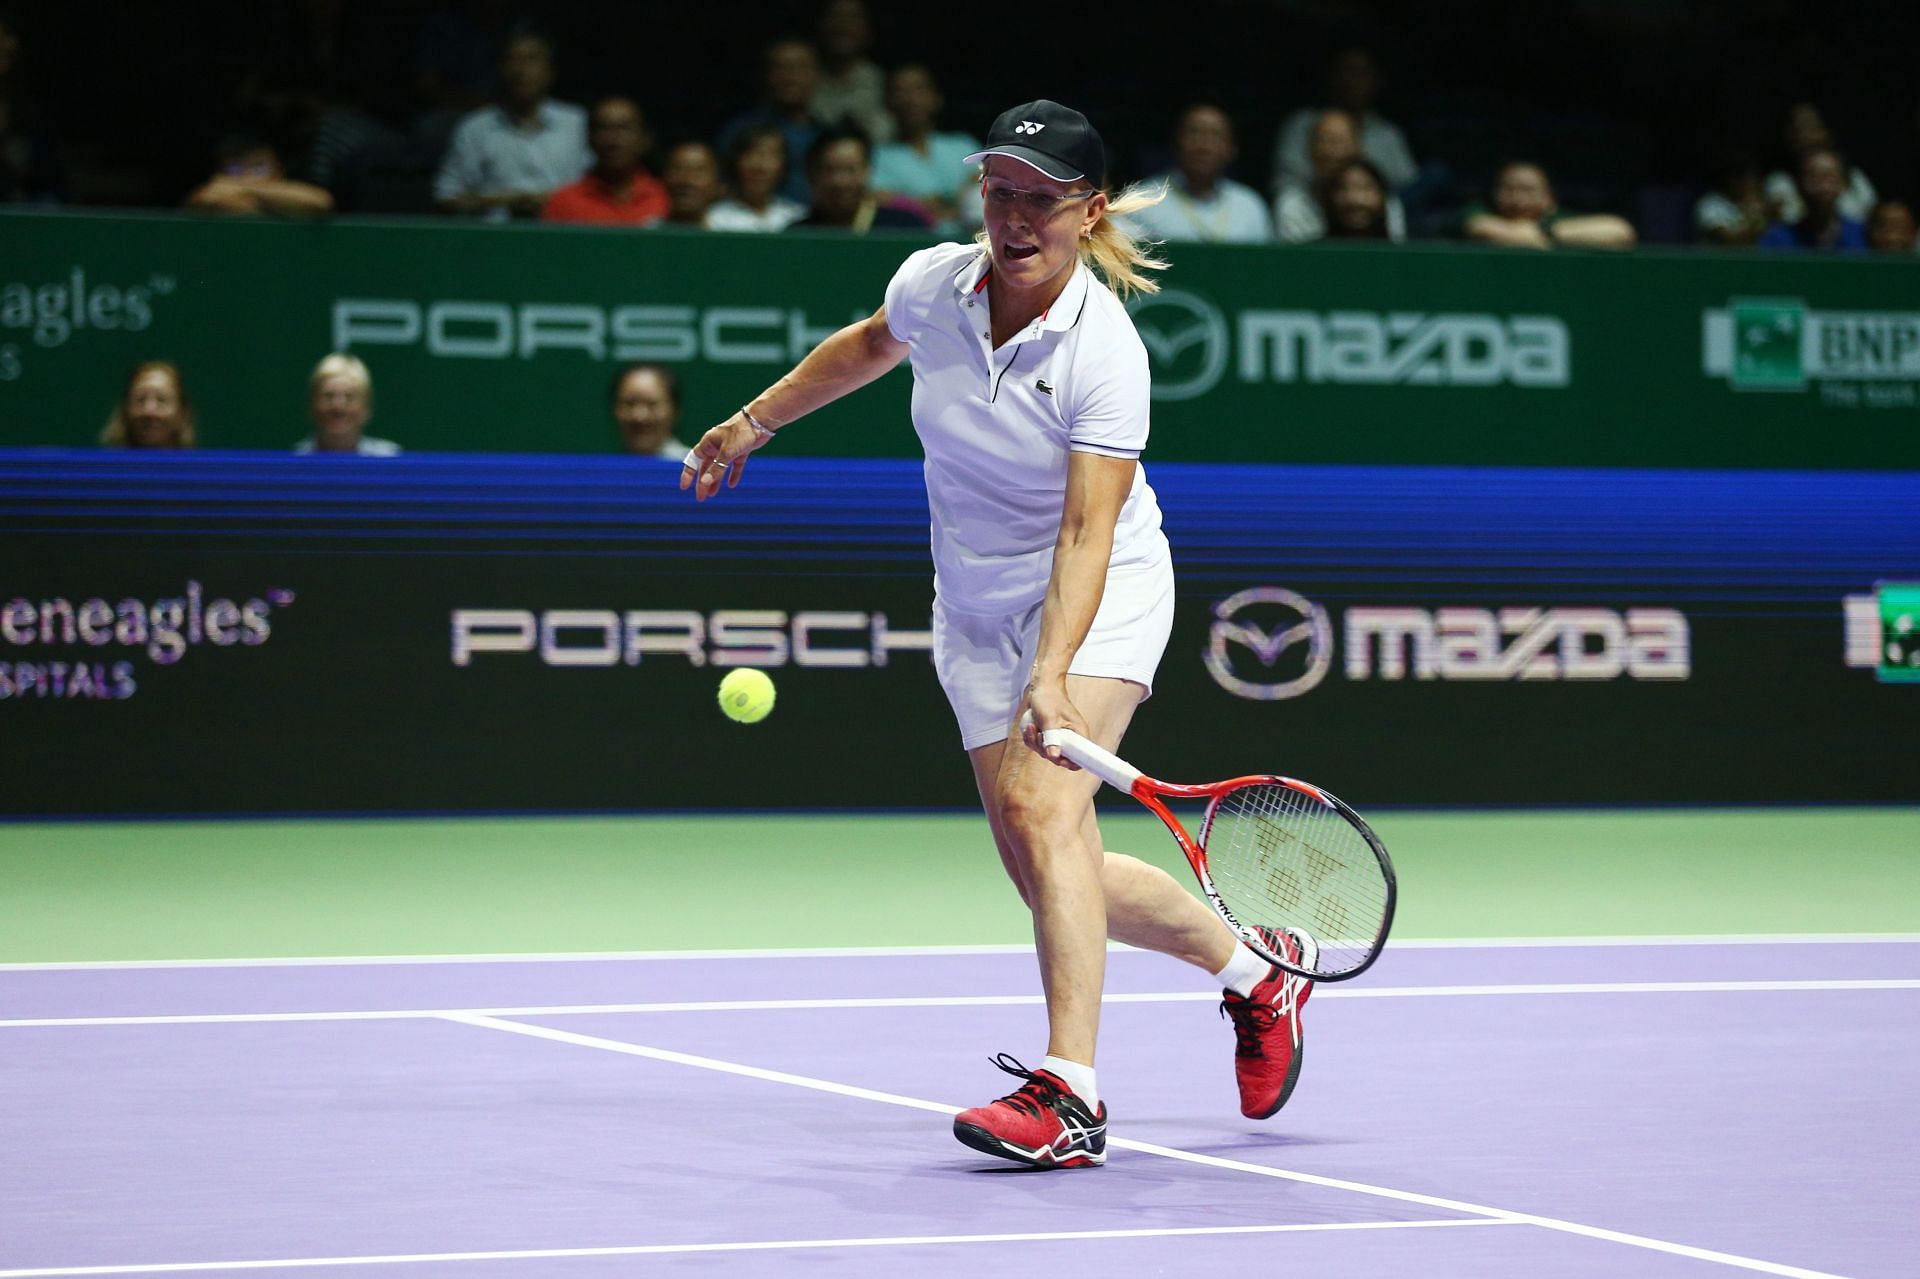 Martina Navratilova in action at a tennis event